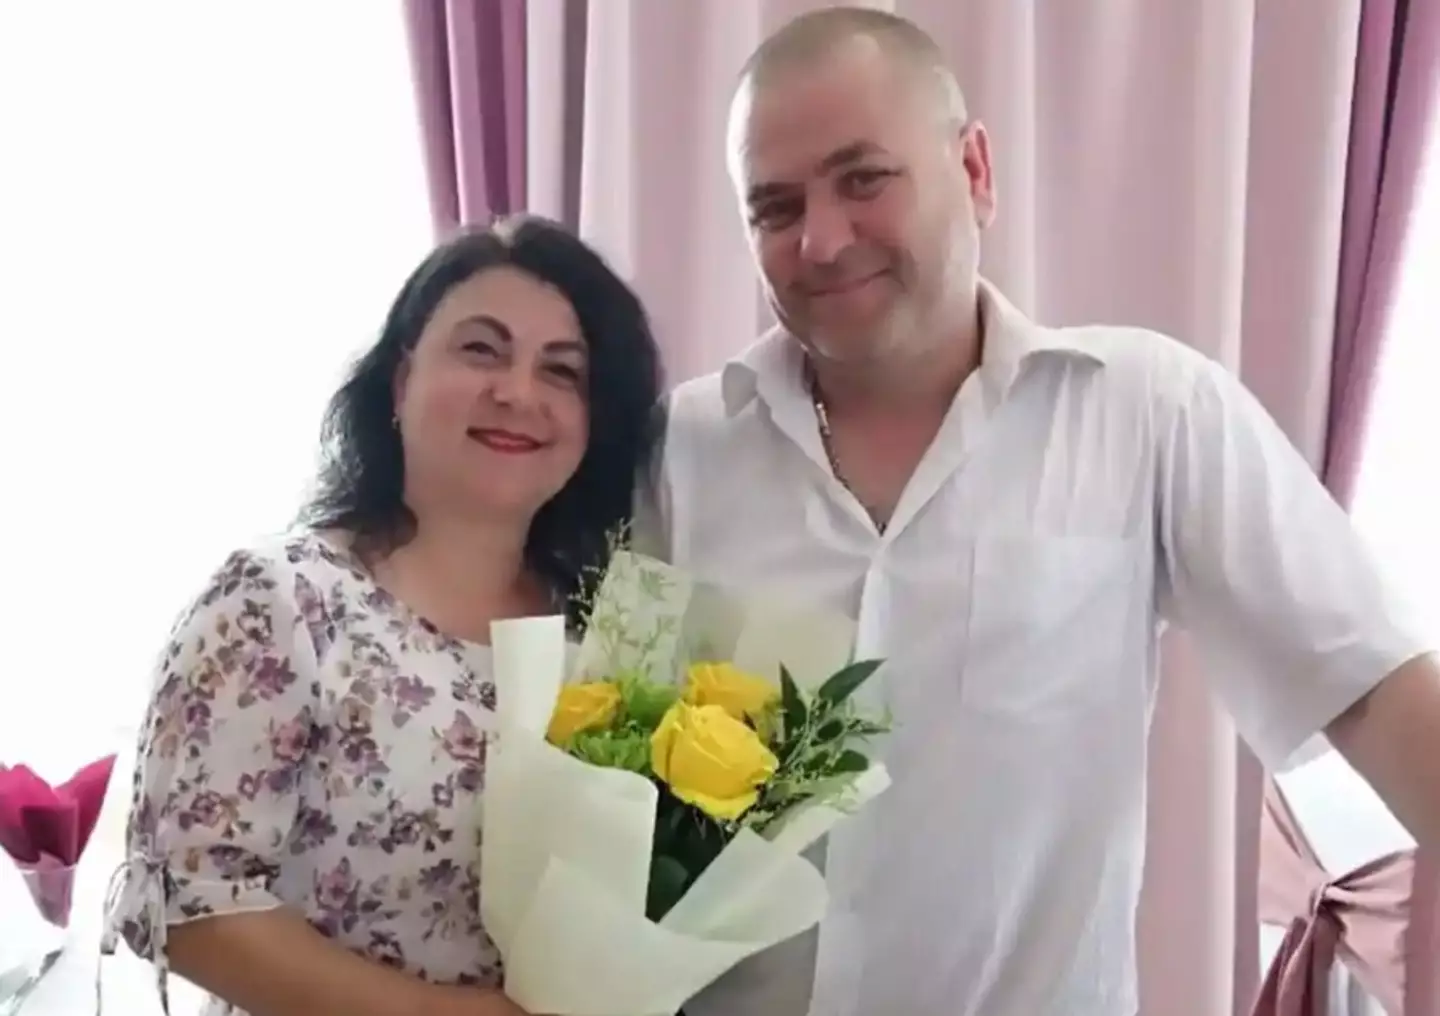 Petro and his wife, Yulia.